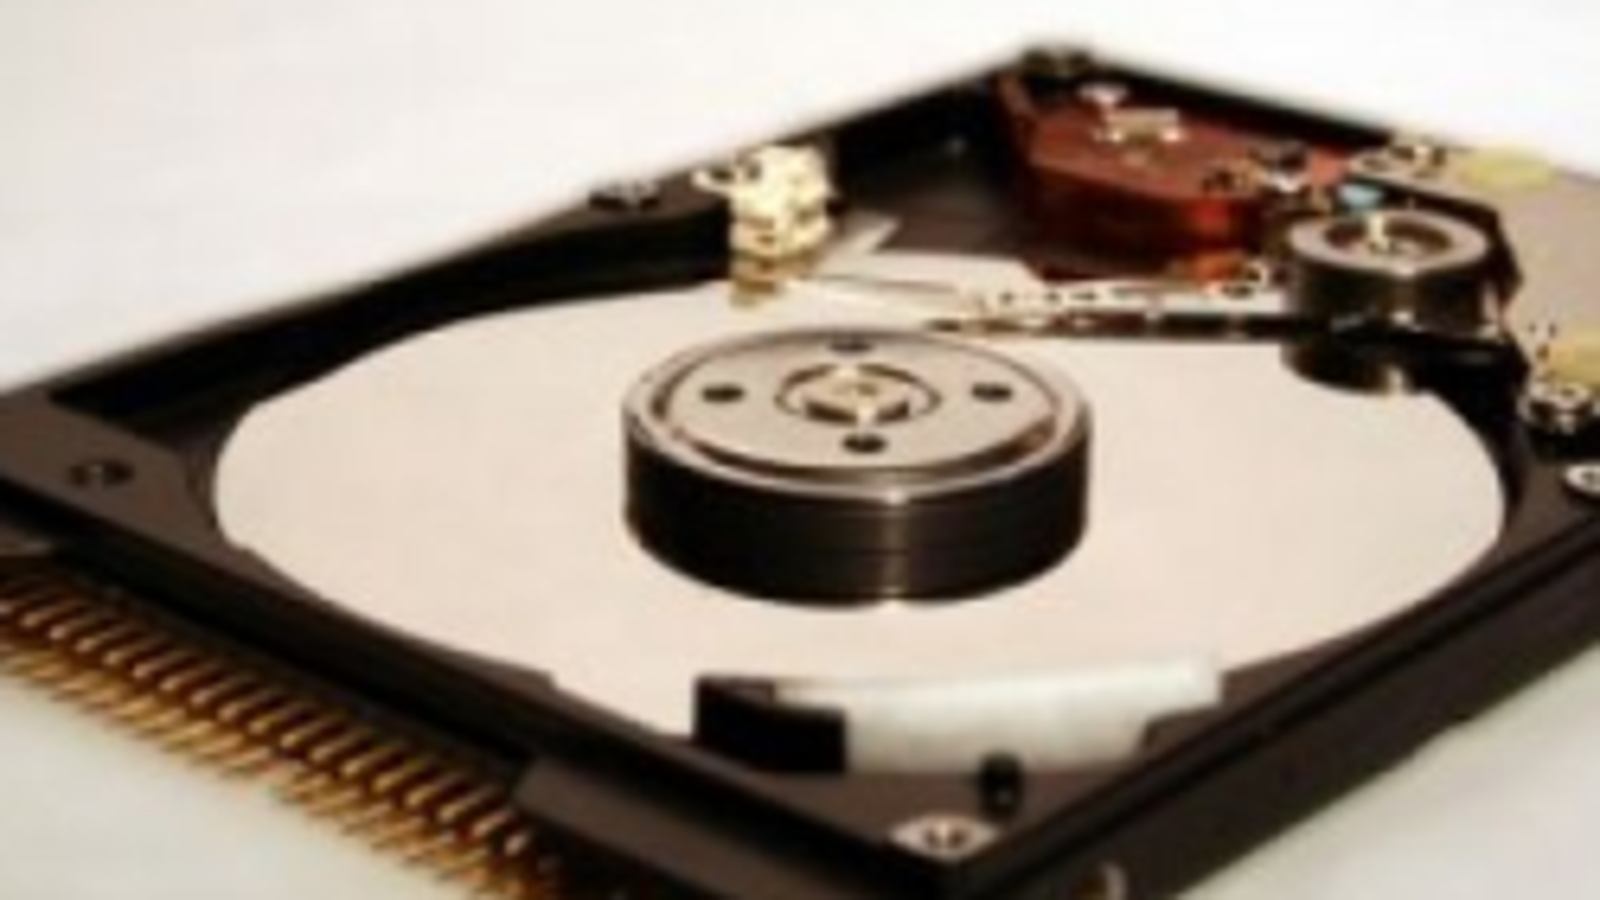 Erase a hard drive for good